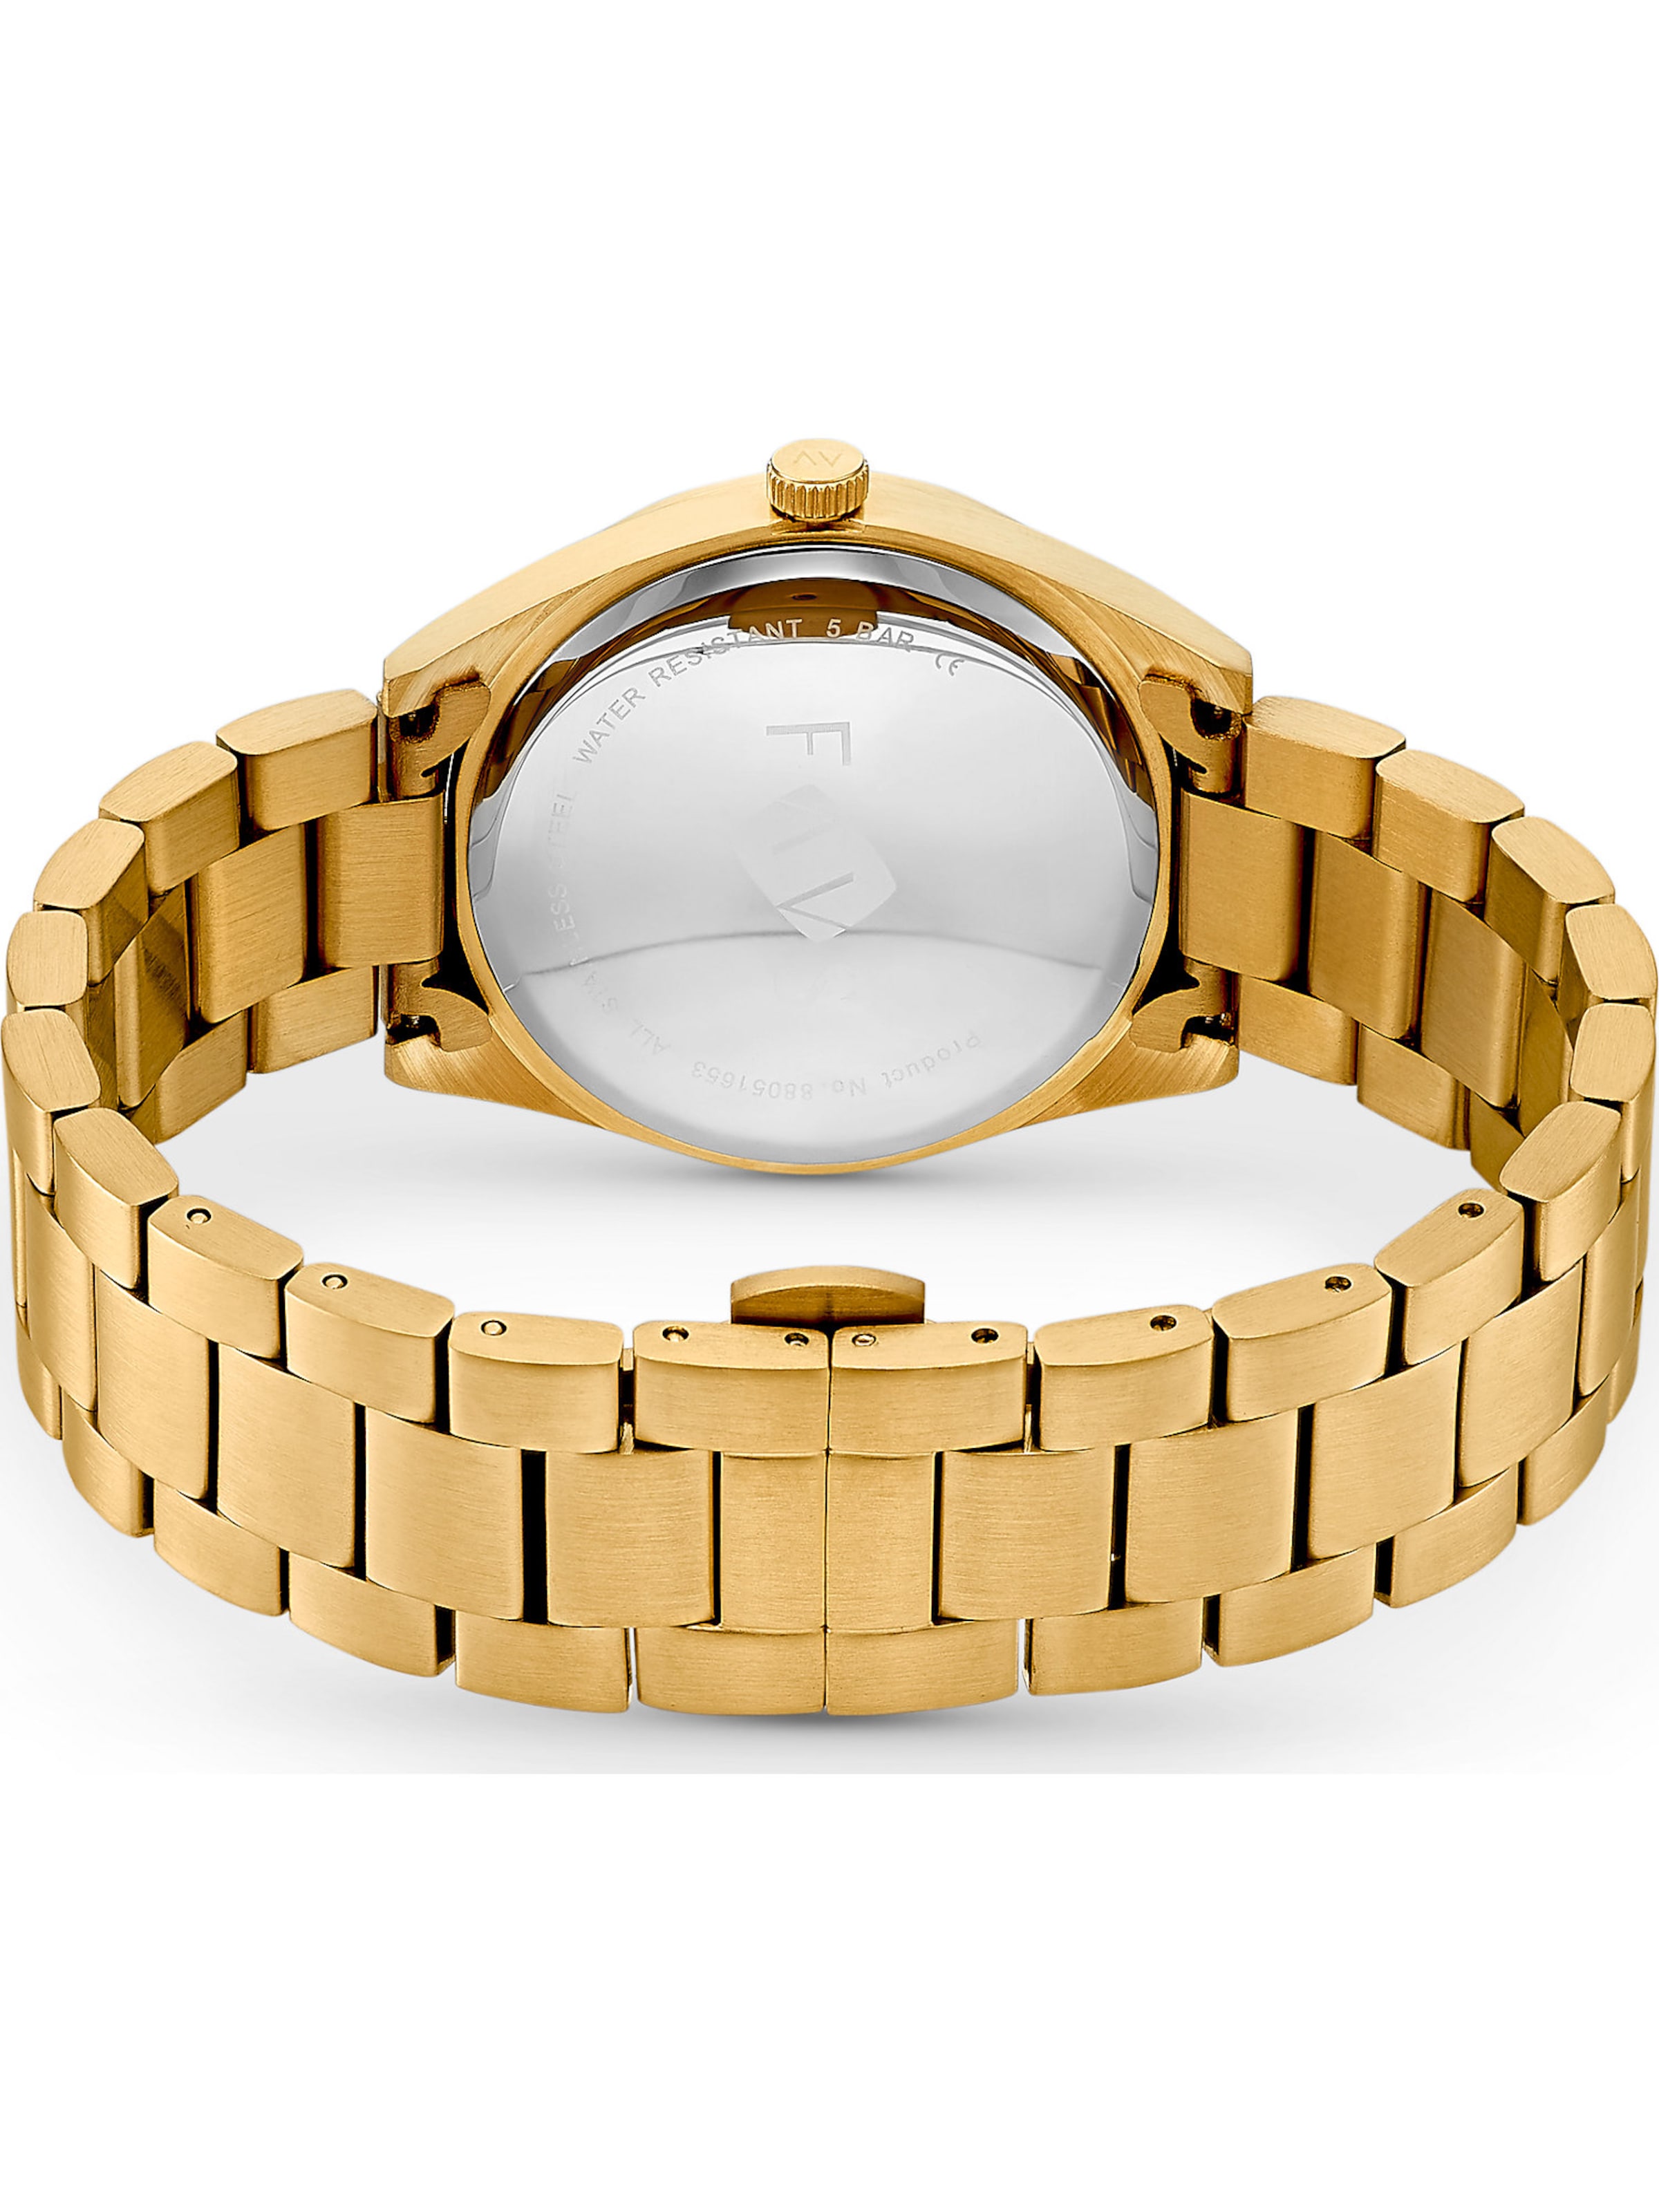 Frauen Uhren FAVS Uhr in Gold - JV75085